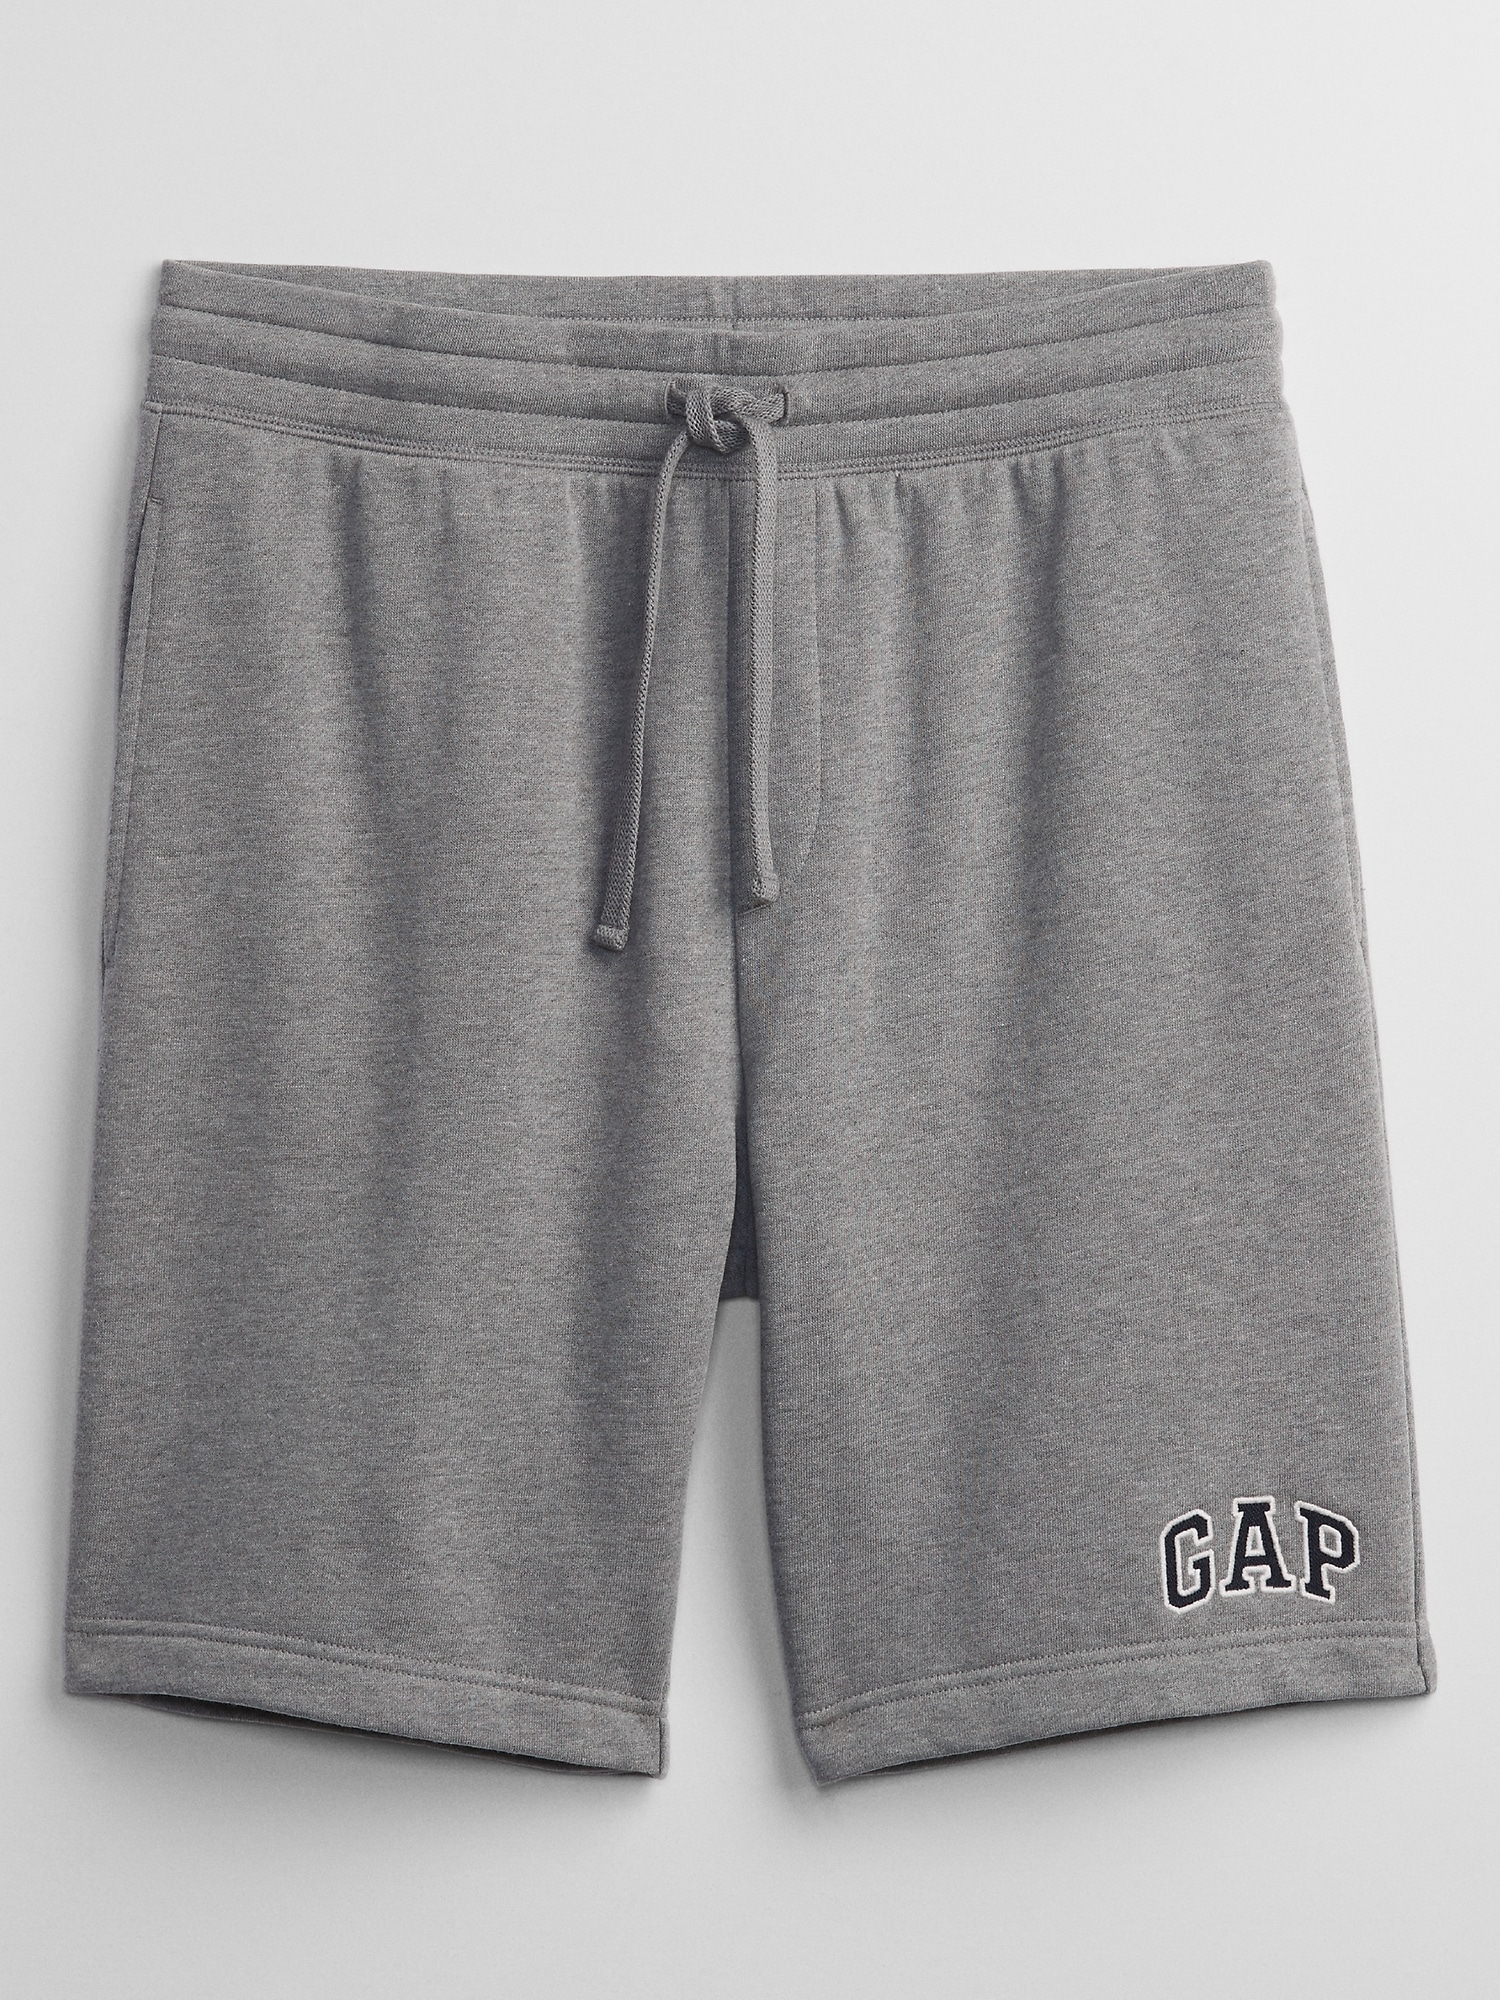 Gap Logo Shorts | Gap Factory